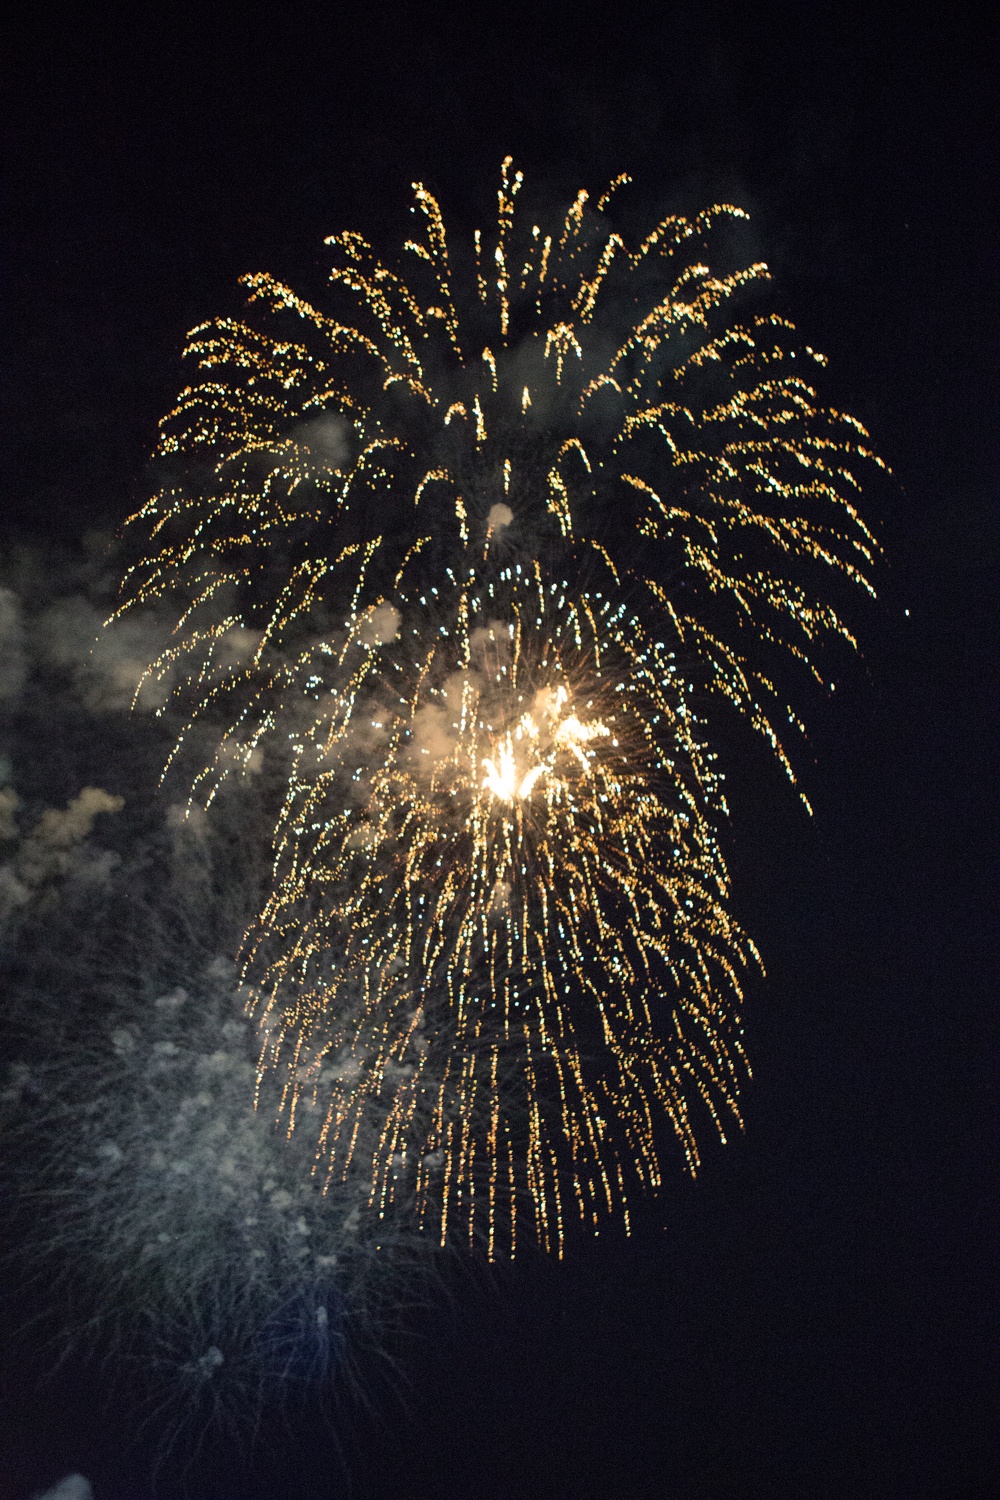 2014 Miramar Air Show Firework Show